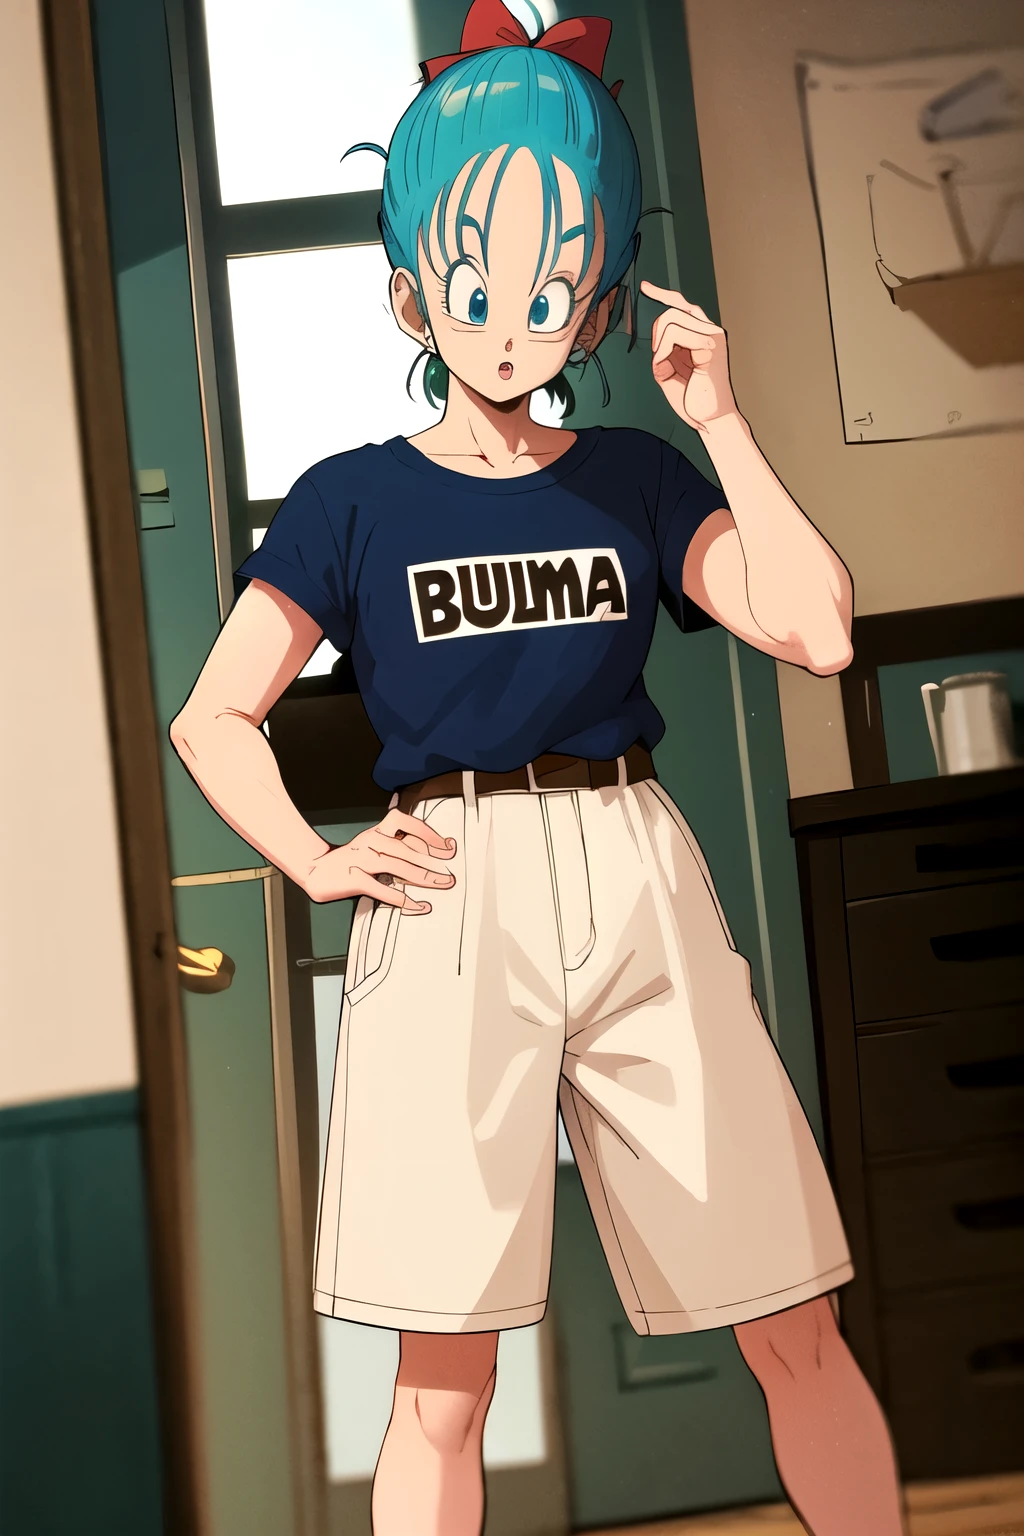 Bulma con la ropa de Goku